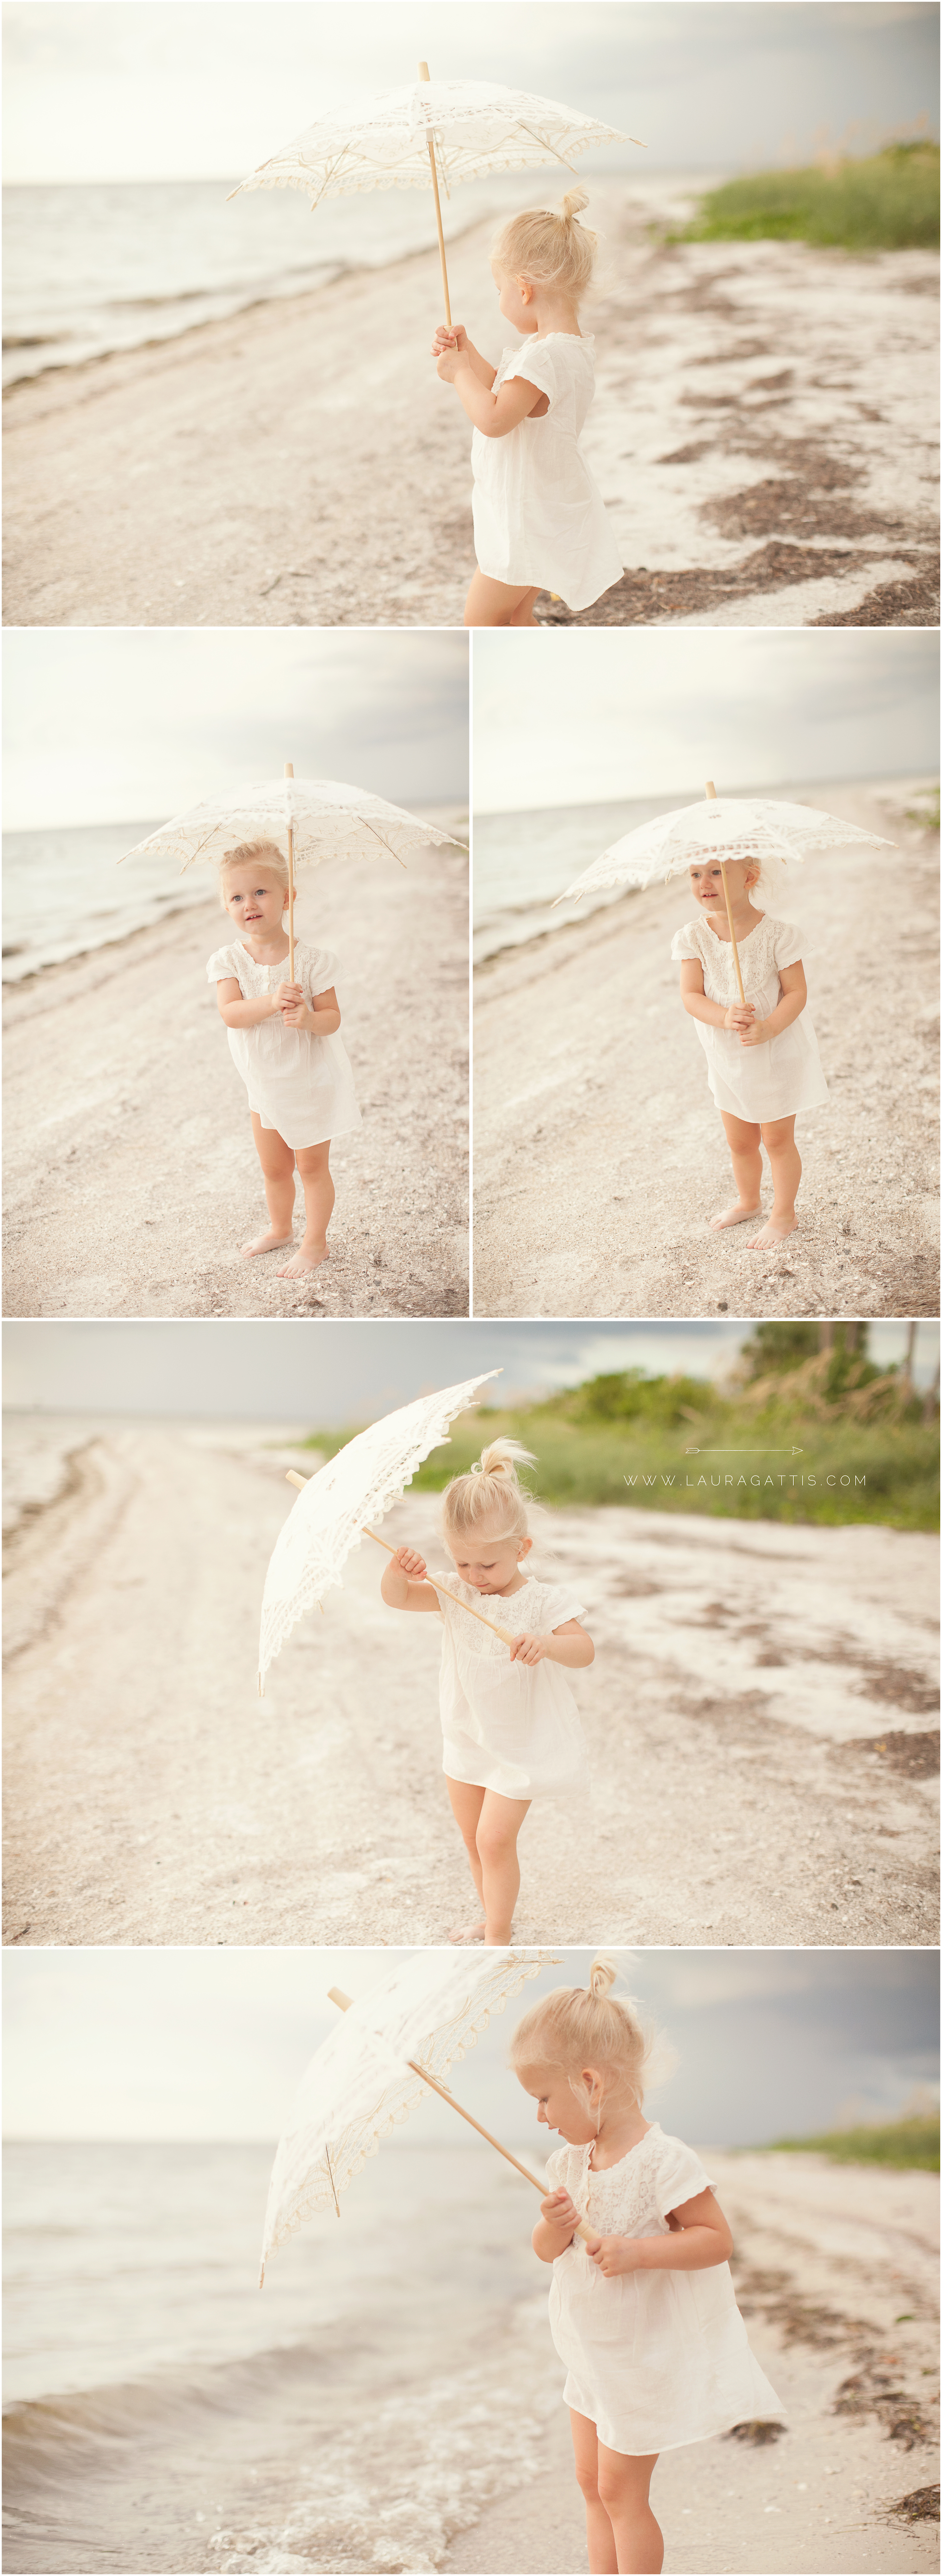 family beach photography | laura gattis photography